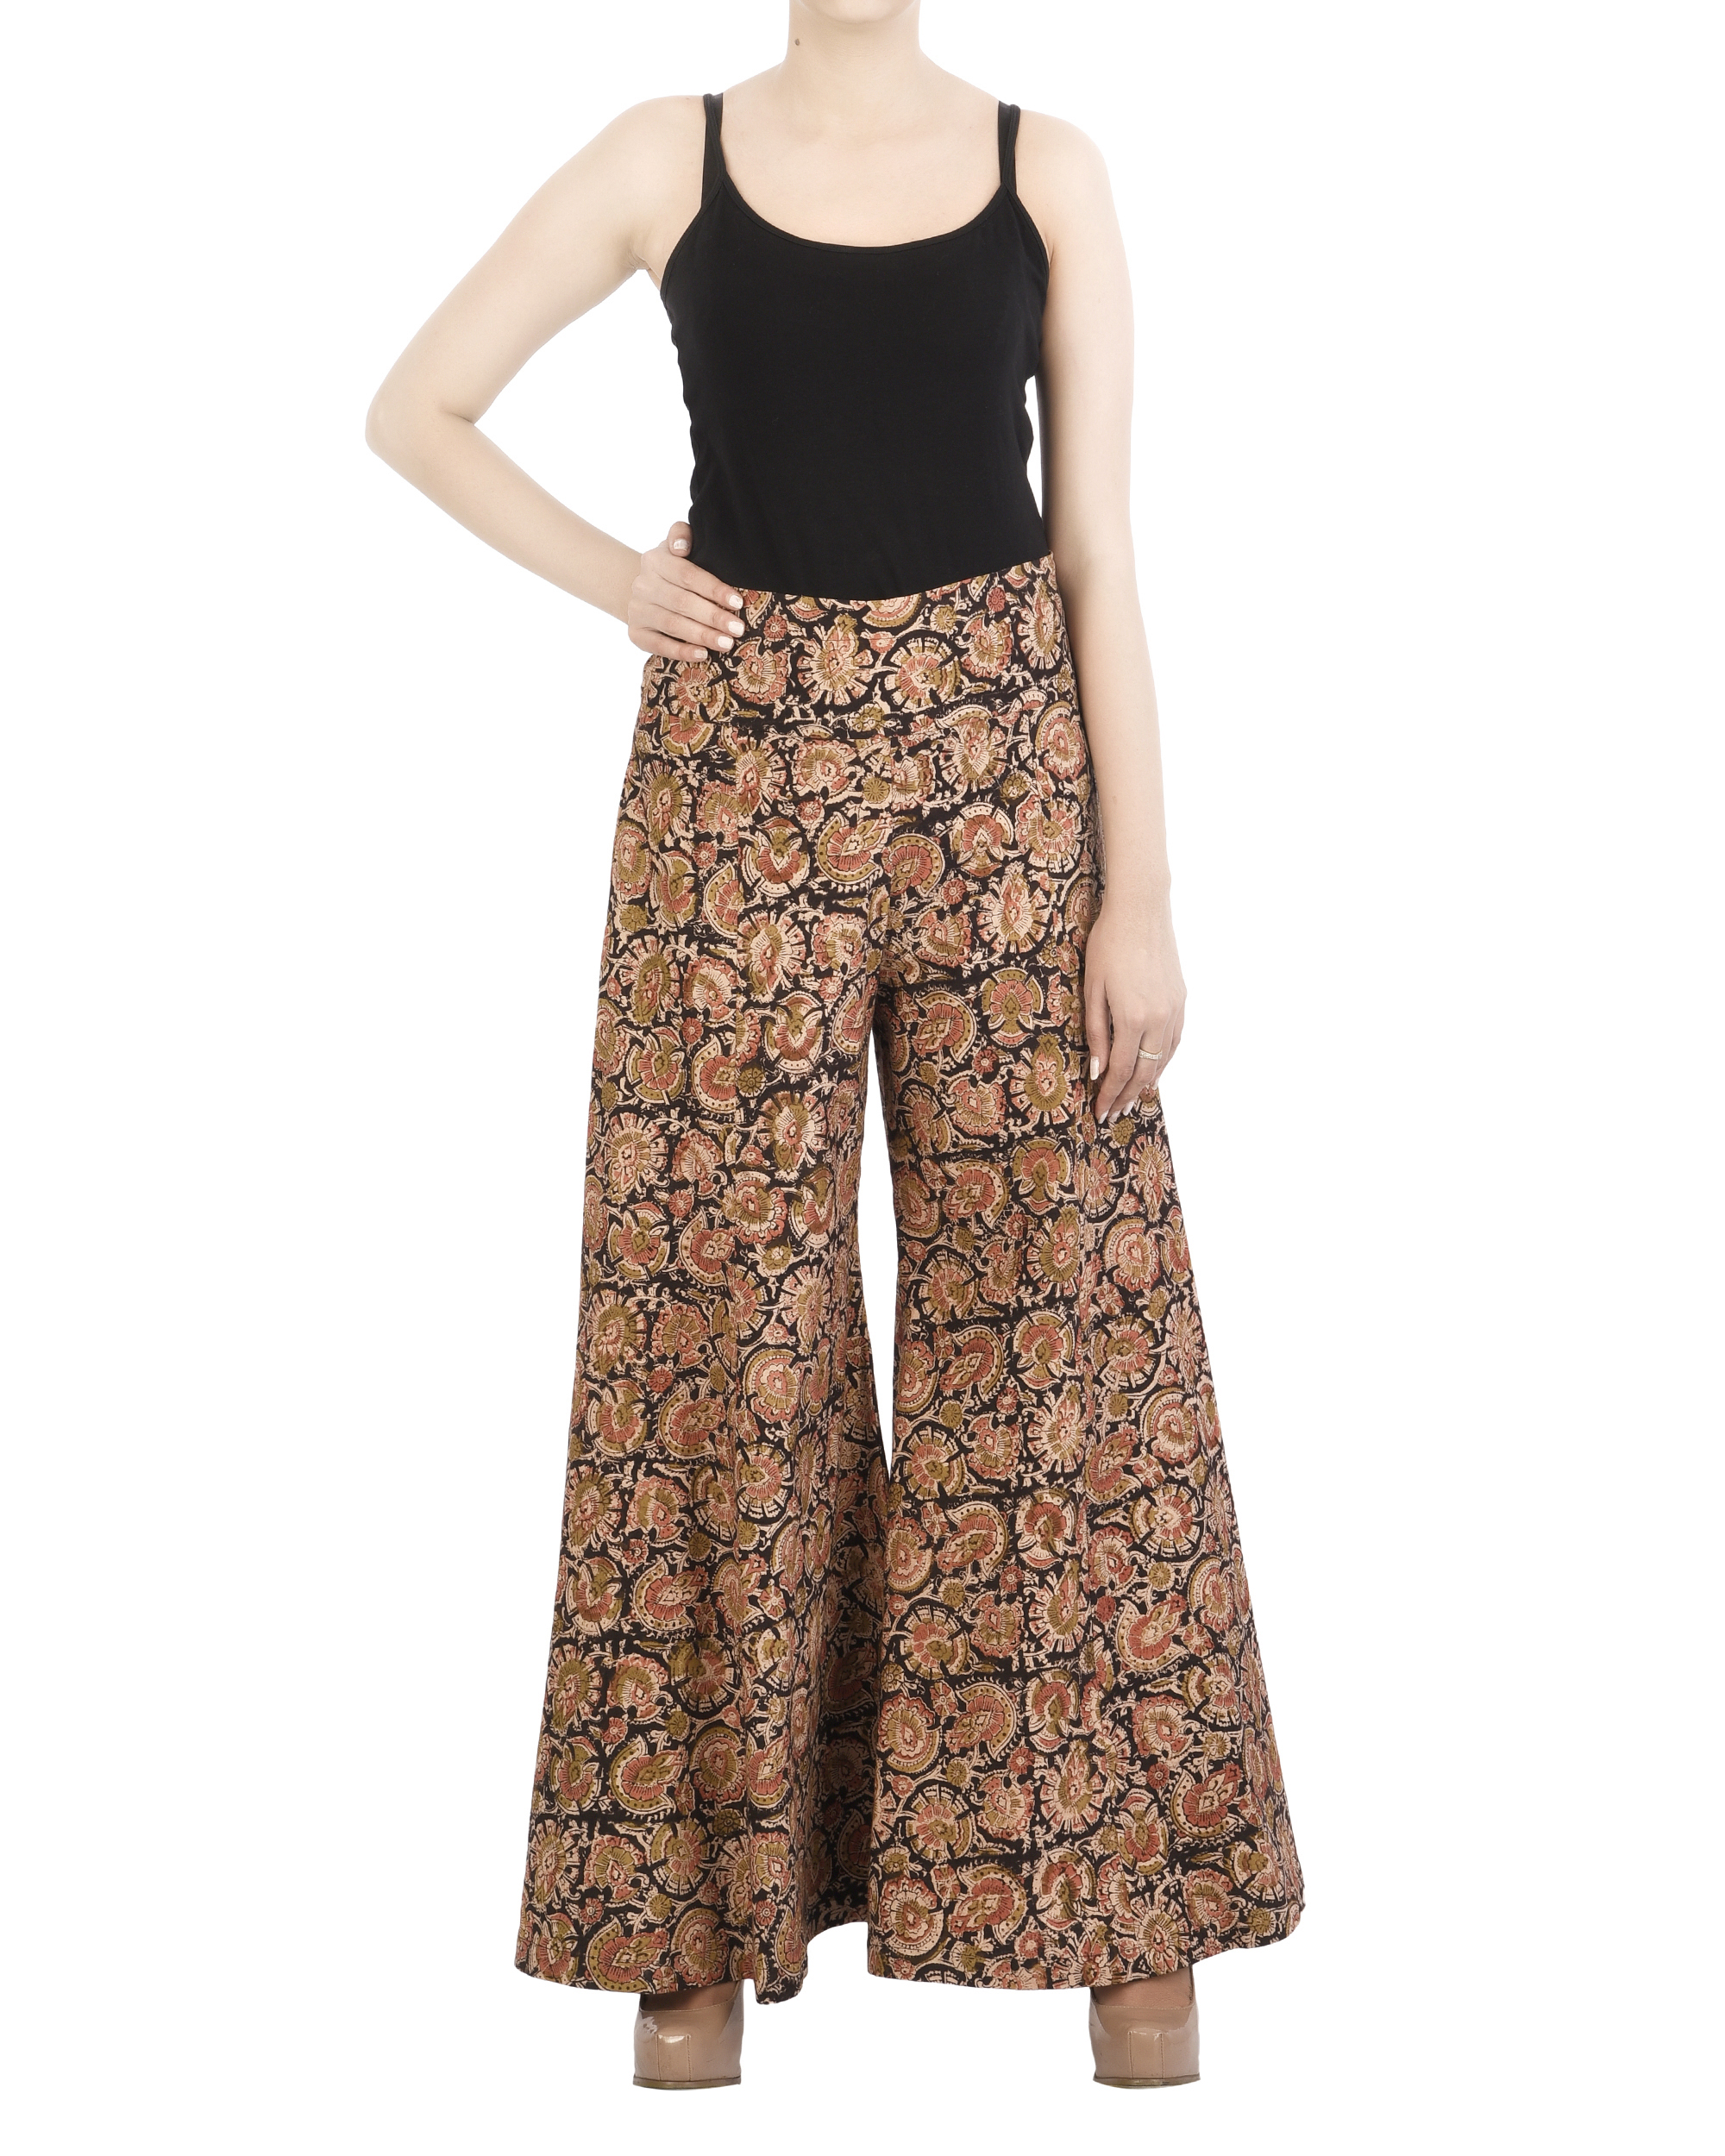 Handprinted extra flared palazzo pants in delightful Kalamkari prints |  Stylish dresses, Fashion outfits, Batik fashion